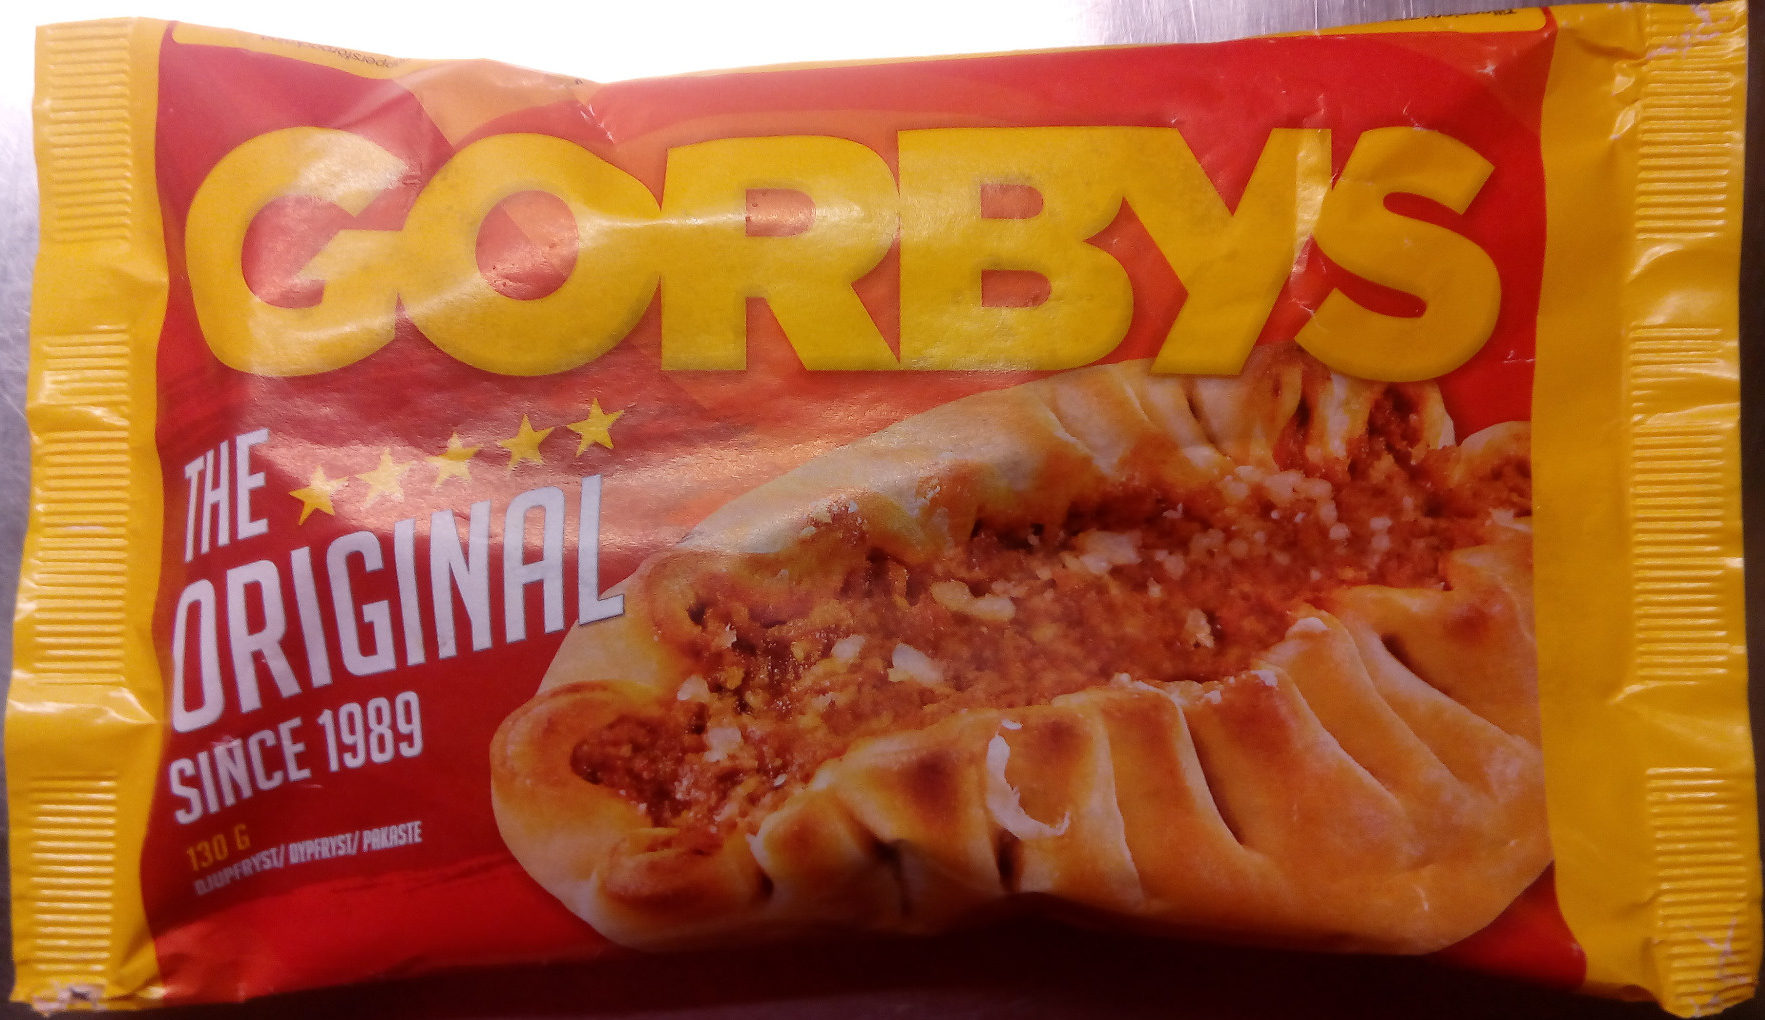 Gorbys The Original since 1989 - Produkt